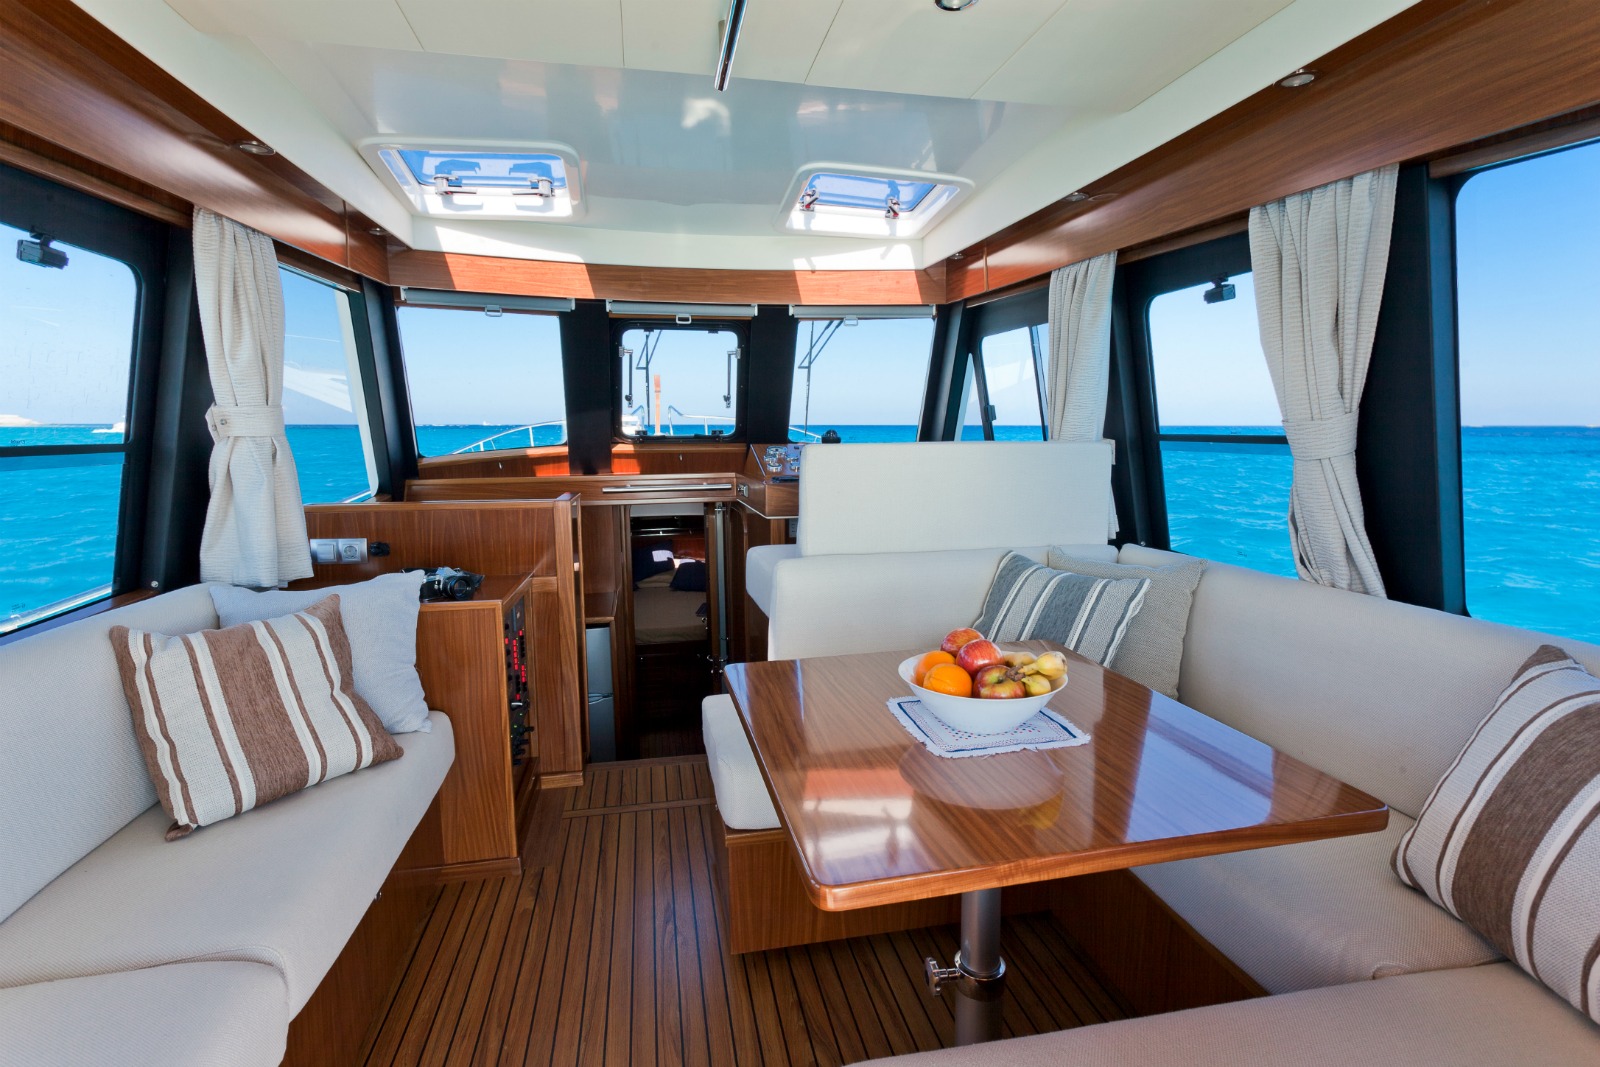 Minorca Islander 42 yacht for sale - Salon